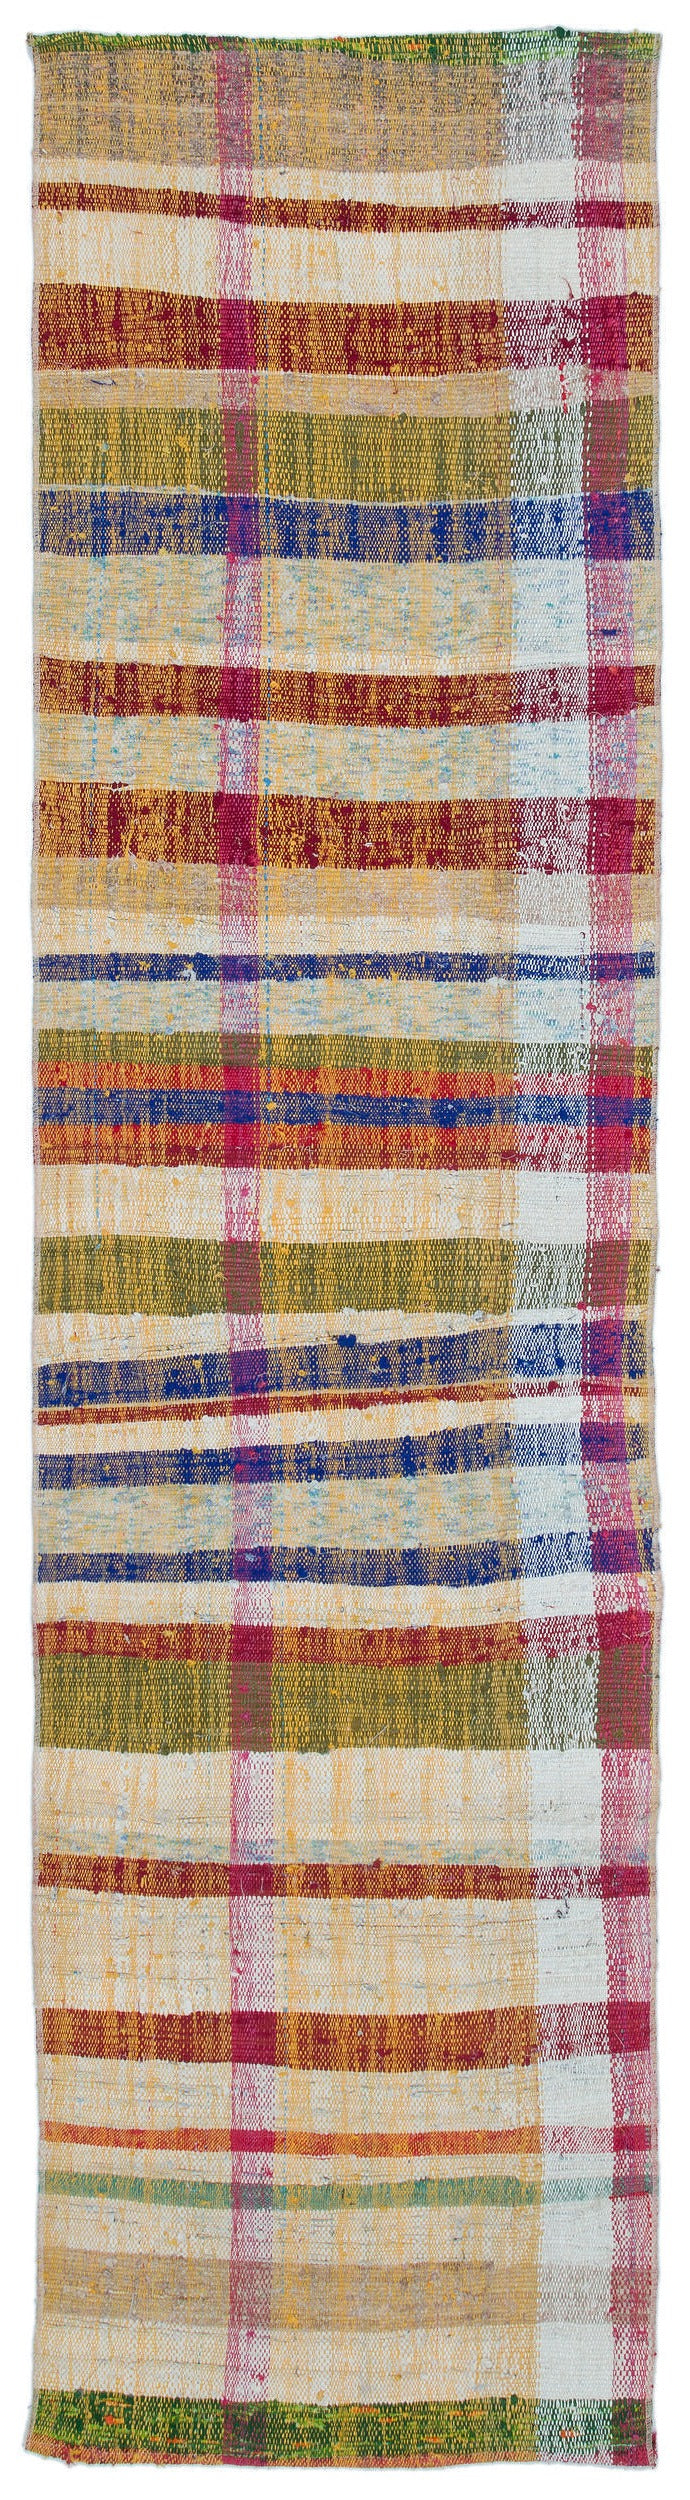 Cretan Yellow Striped Wool Hand-Woven Carpet 061 x 236